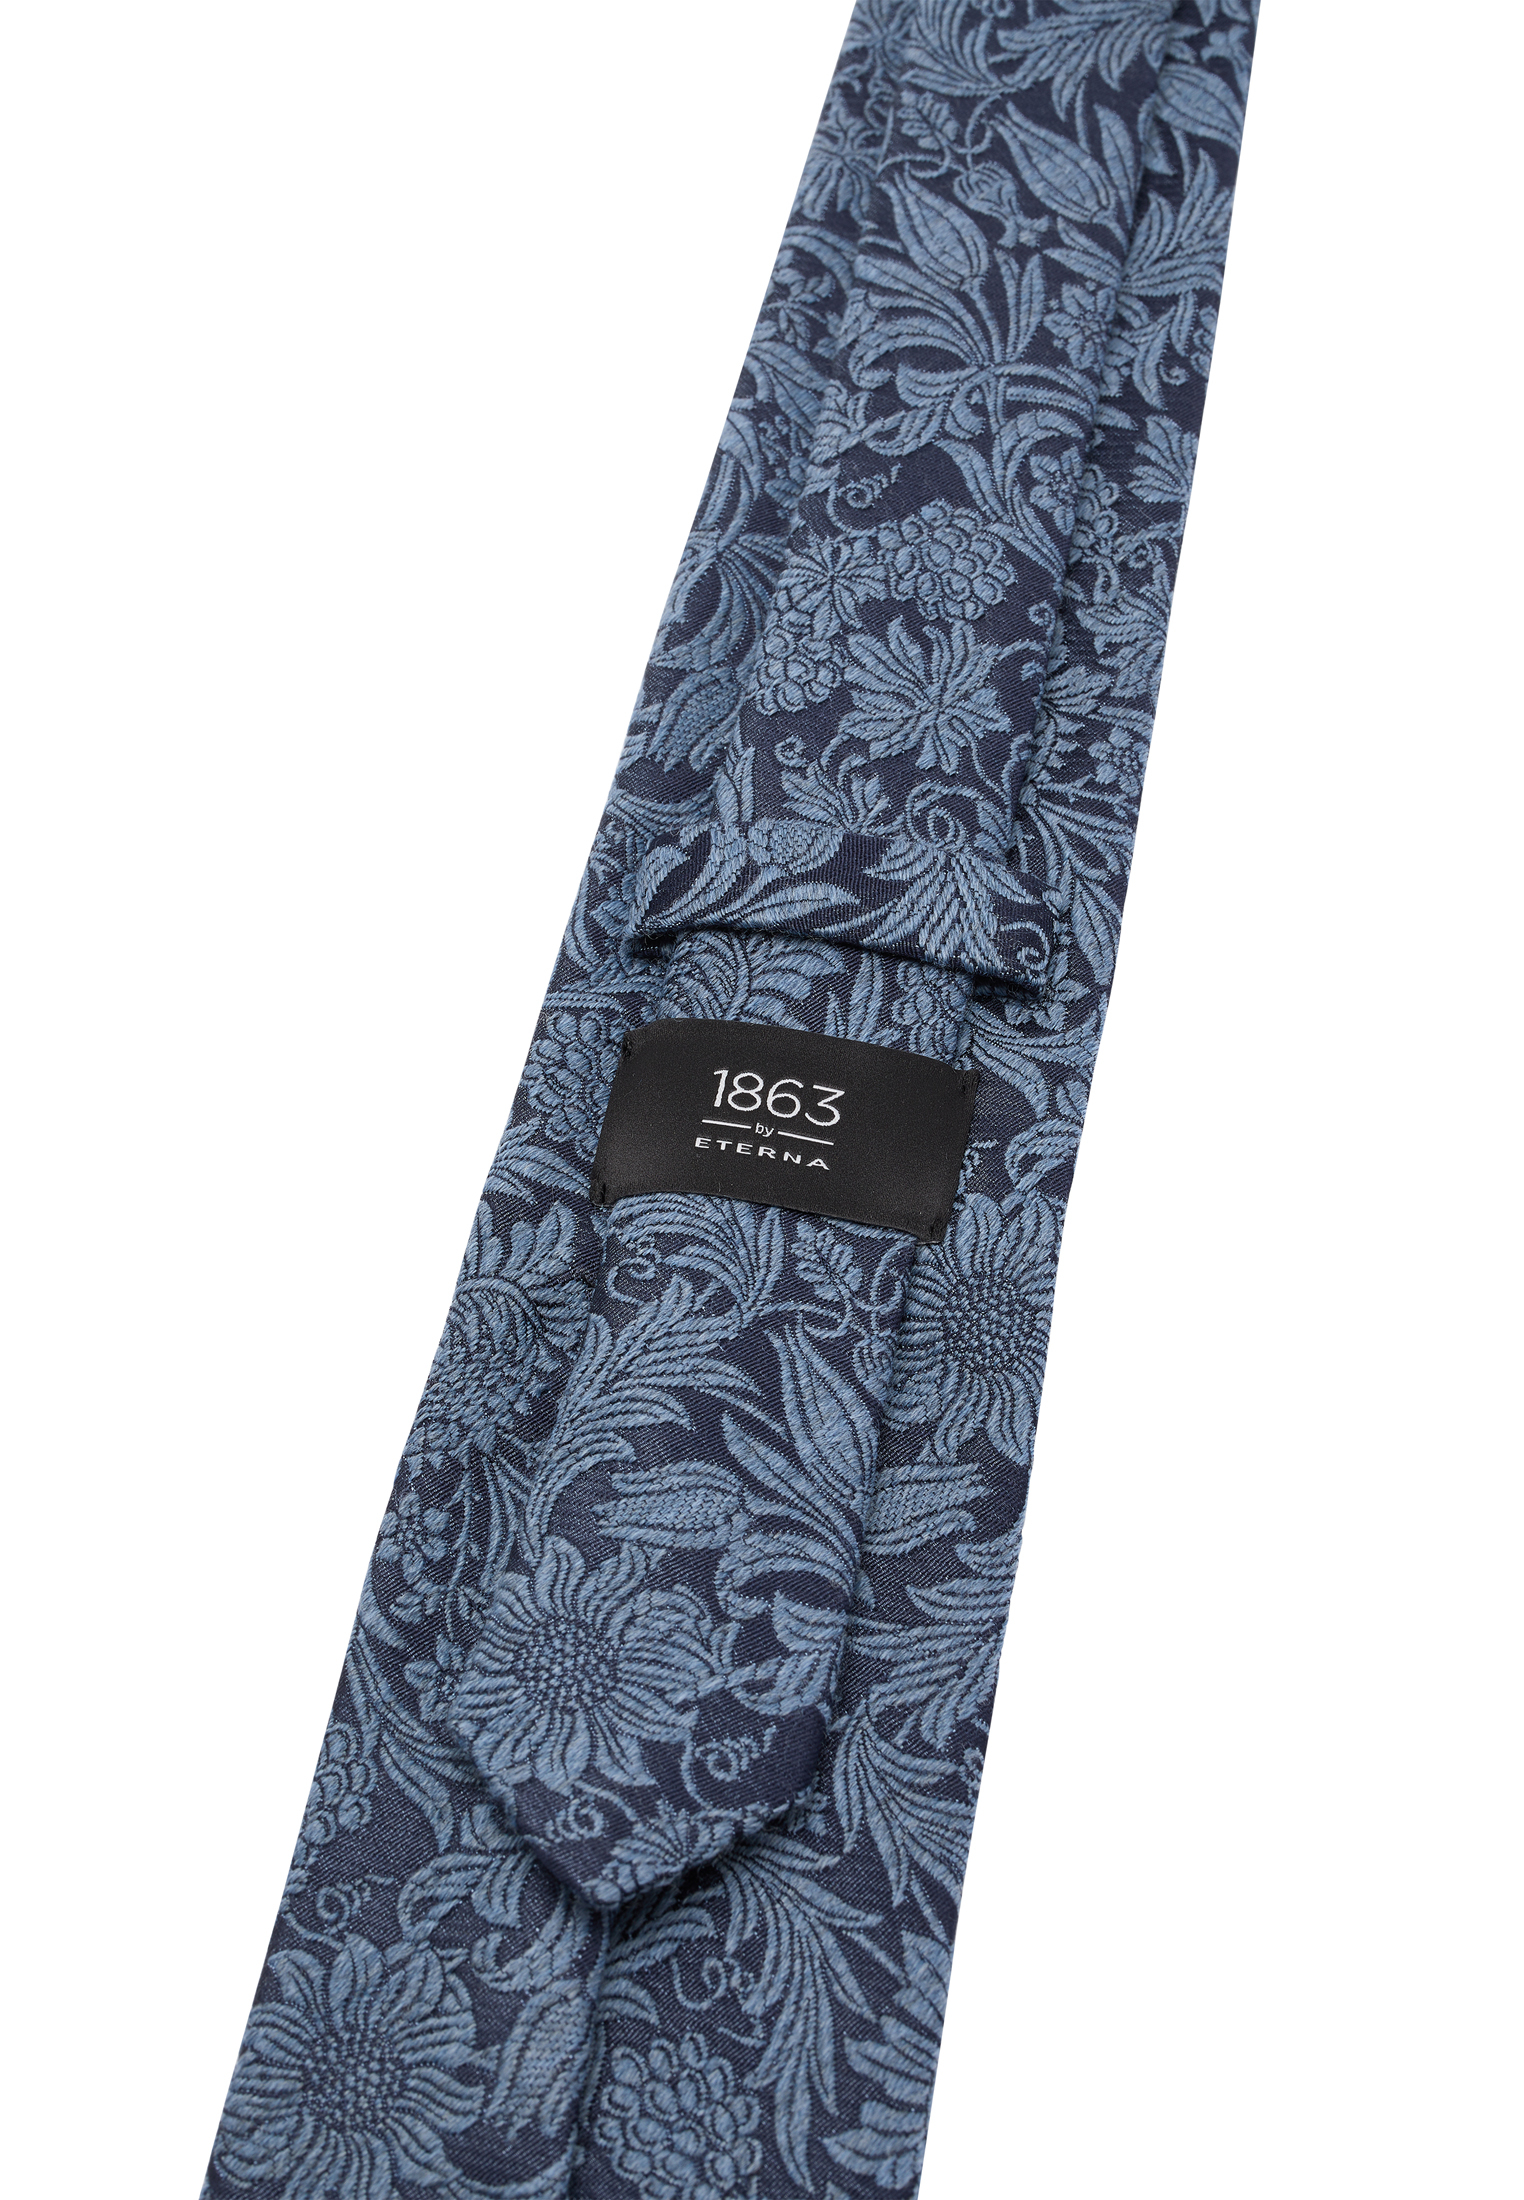 Krawatte in gemustert dunkelblau | | 1AC01901-01-81-142 dunkelblau 142 